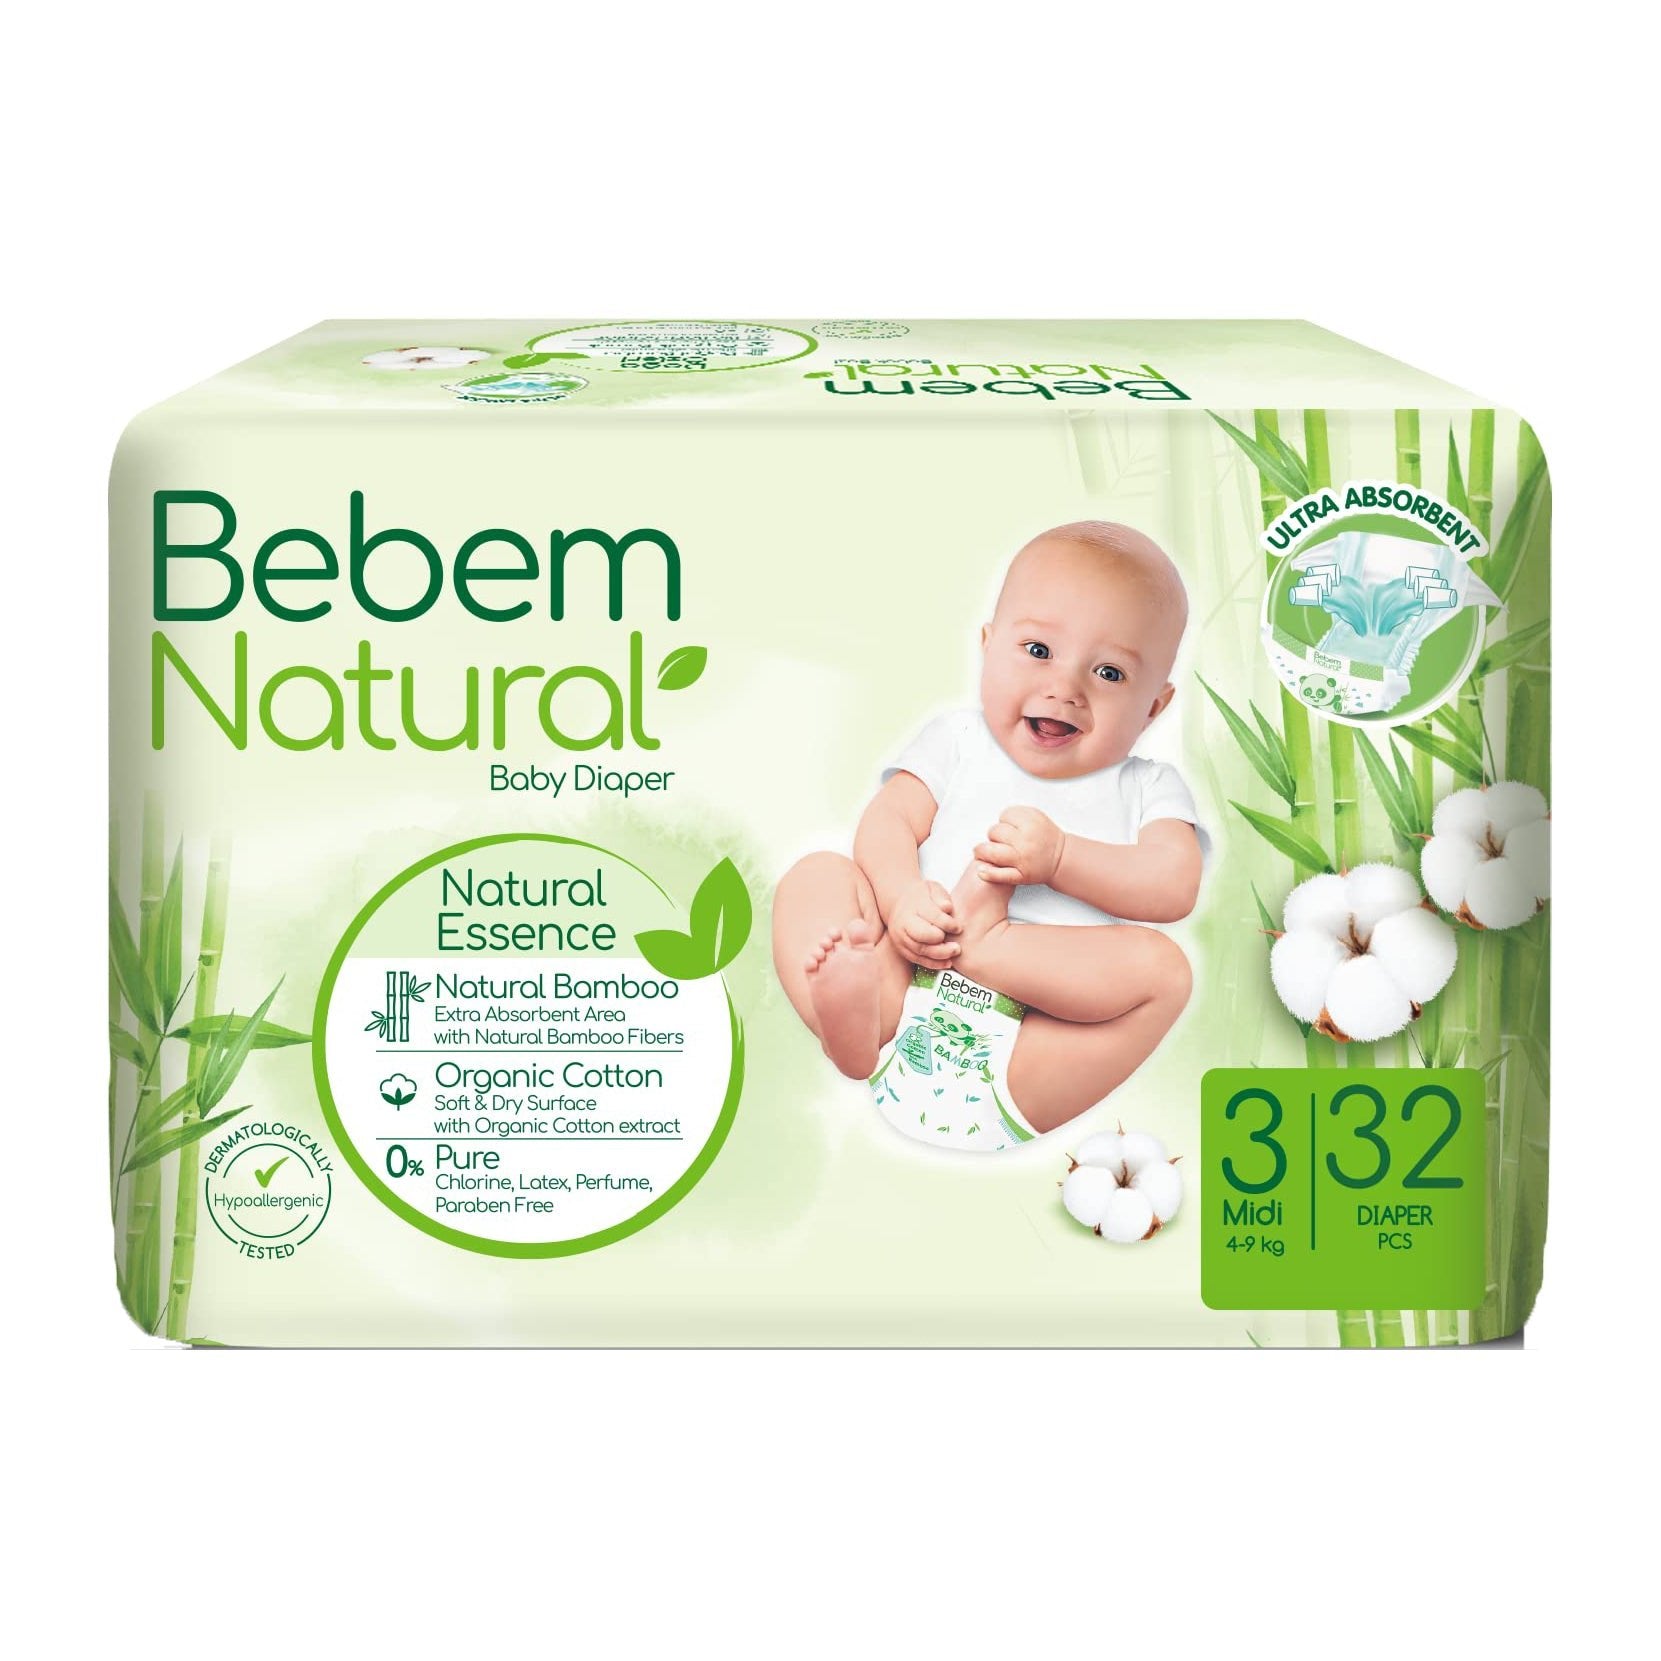 Bebem Natural Baby Diaper Size 3 Midi (4-9kg) - 32 Diaper - Bloom Pharmacy